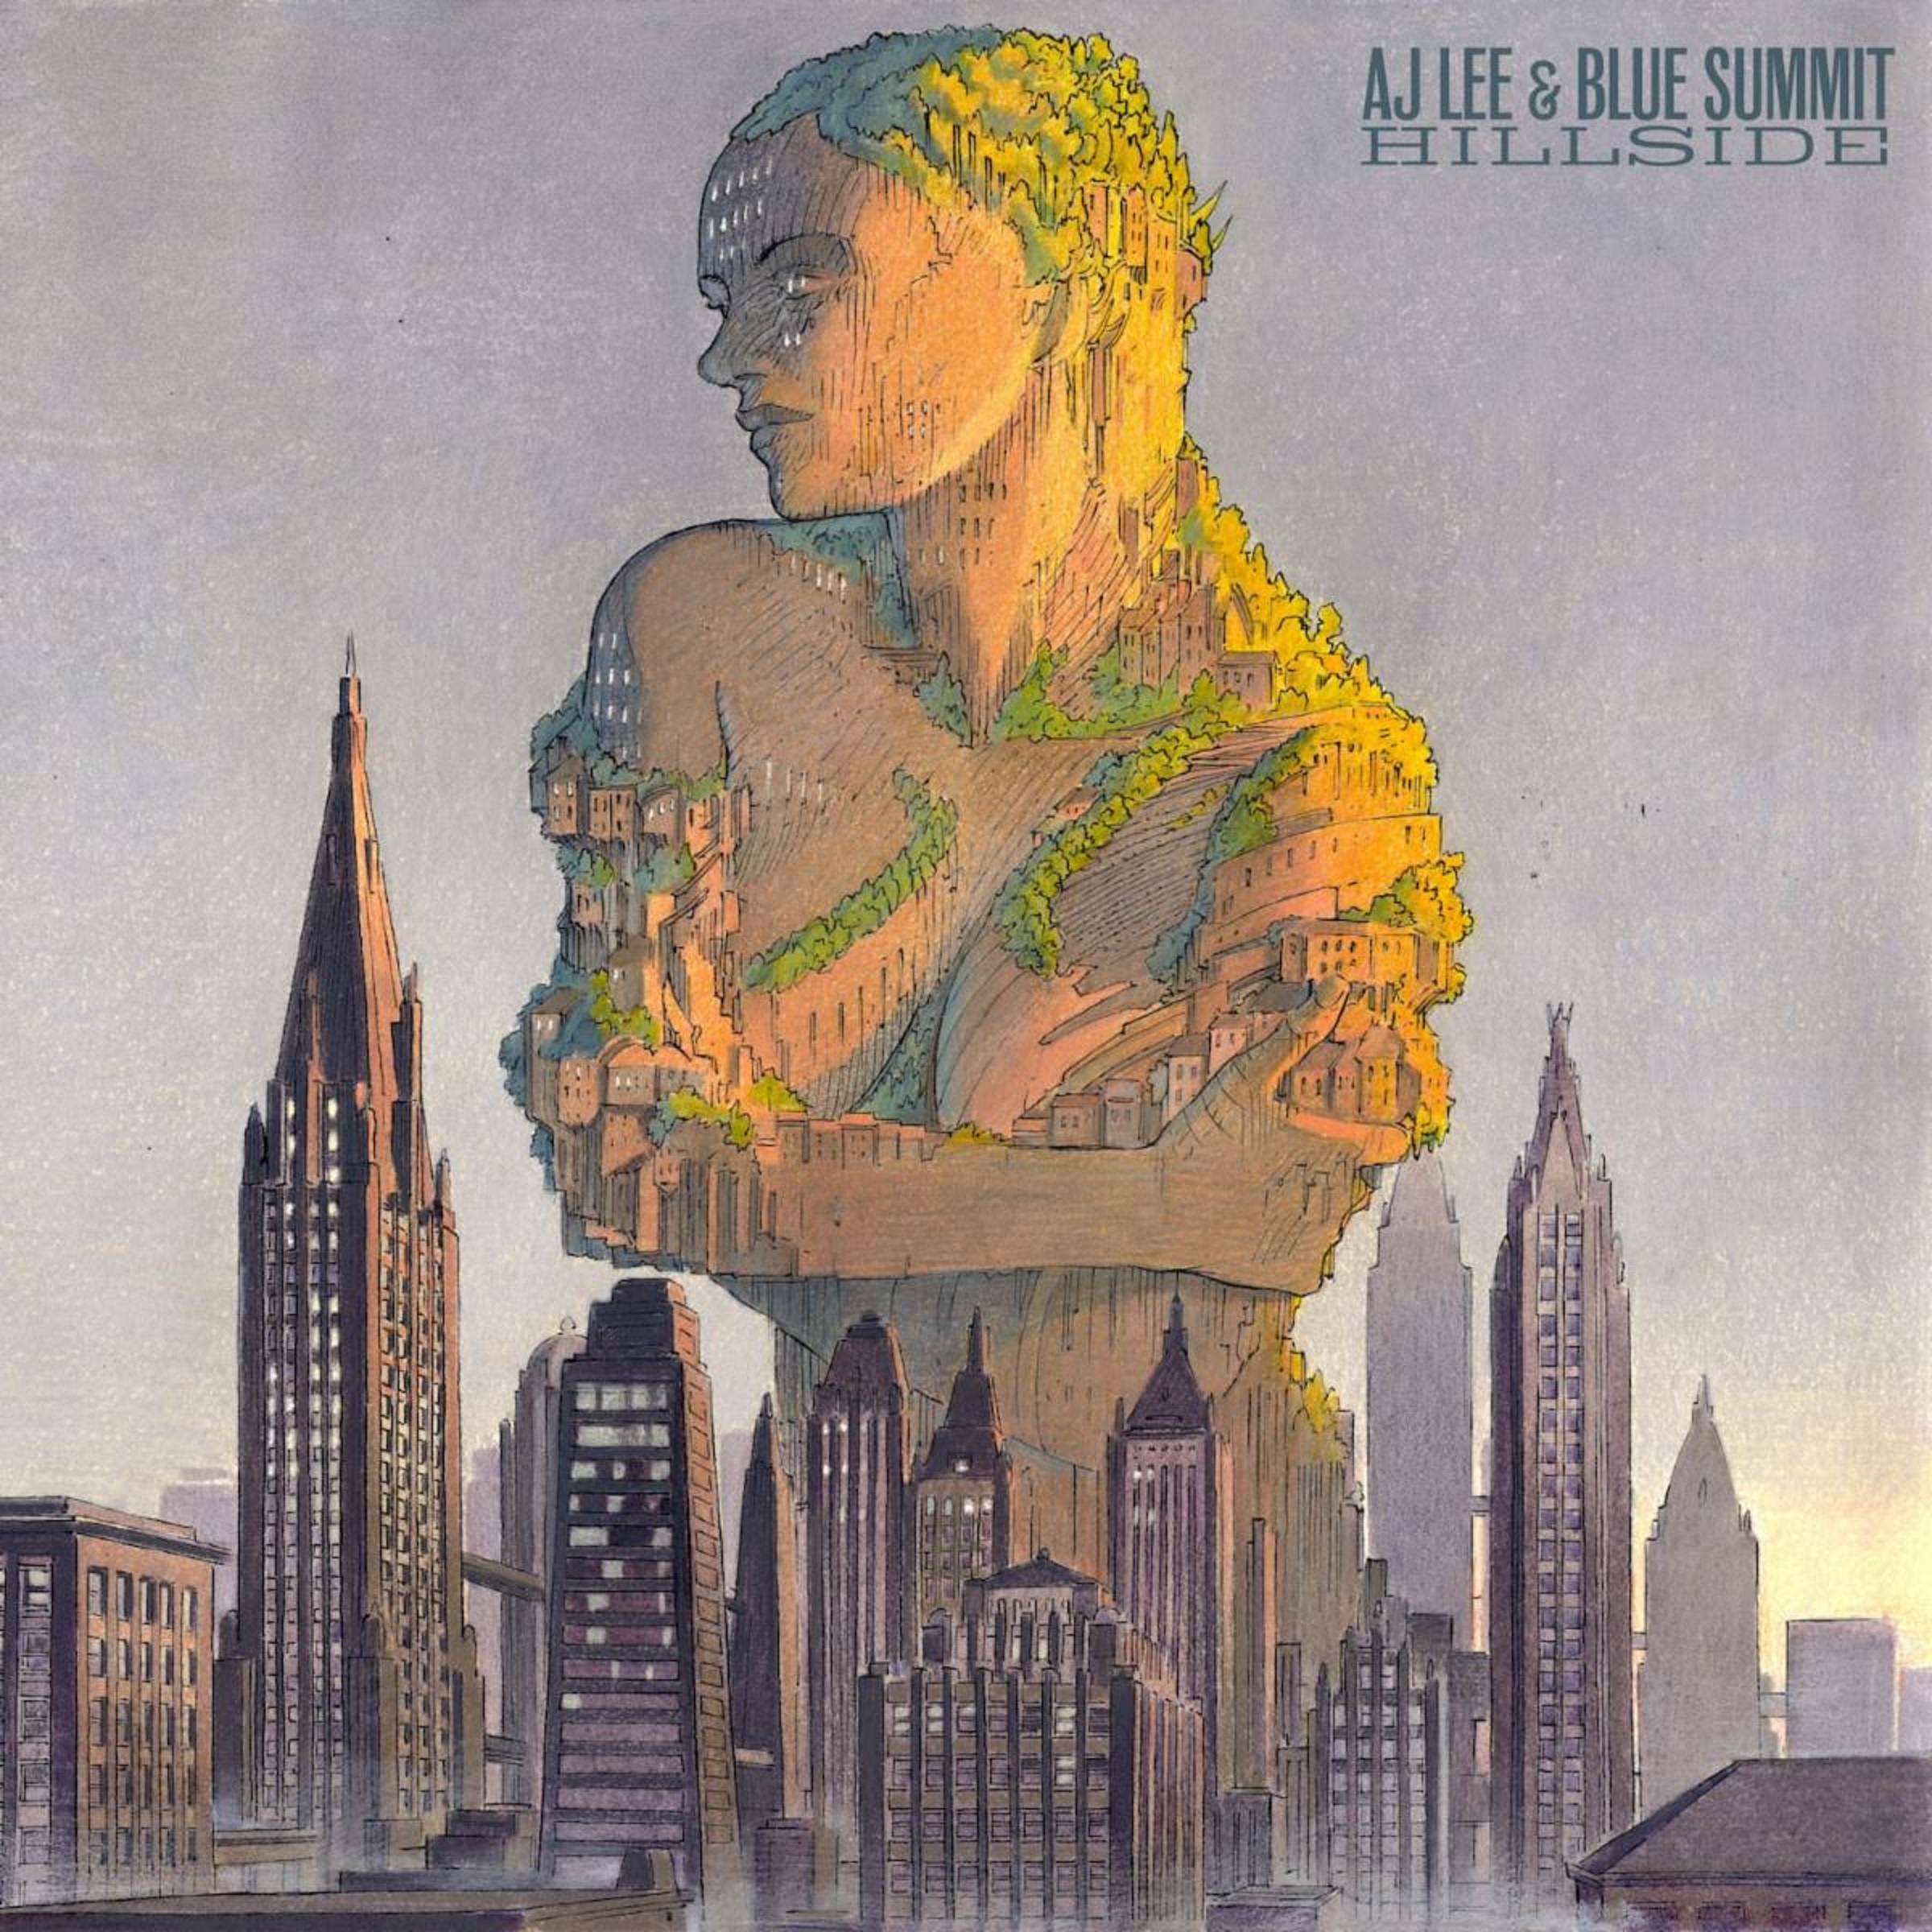 AJ Lee & Blue Summit Blaze Their Own Path With New Album City of Glass